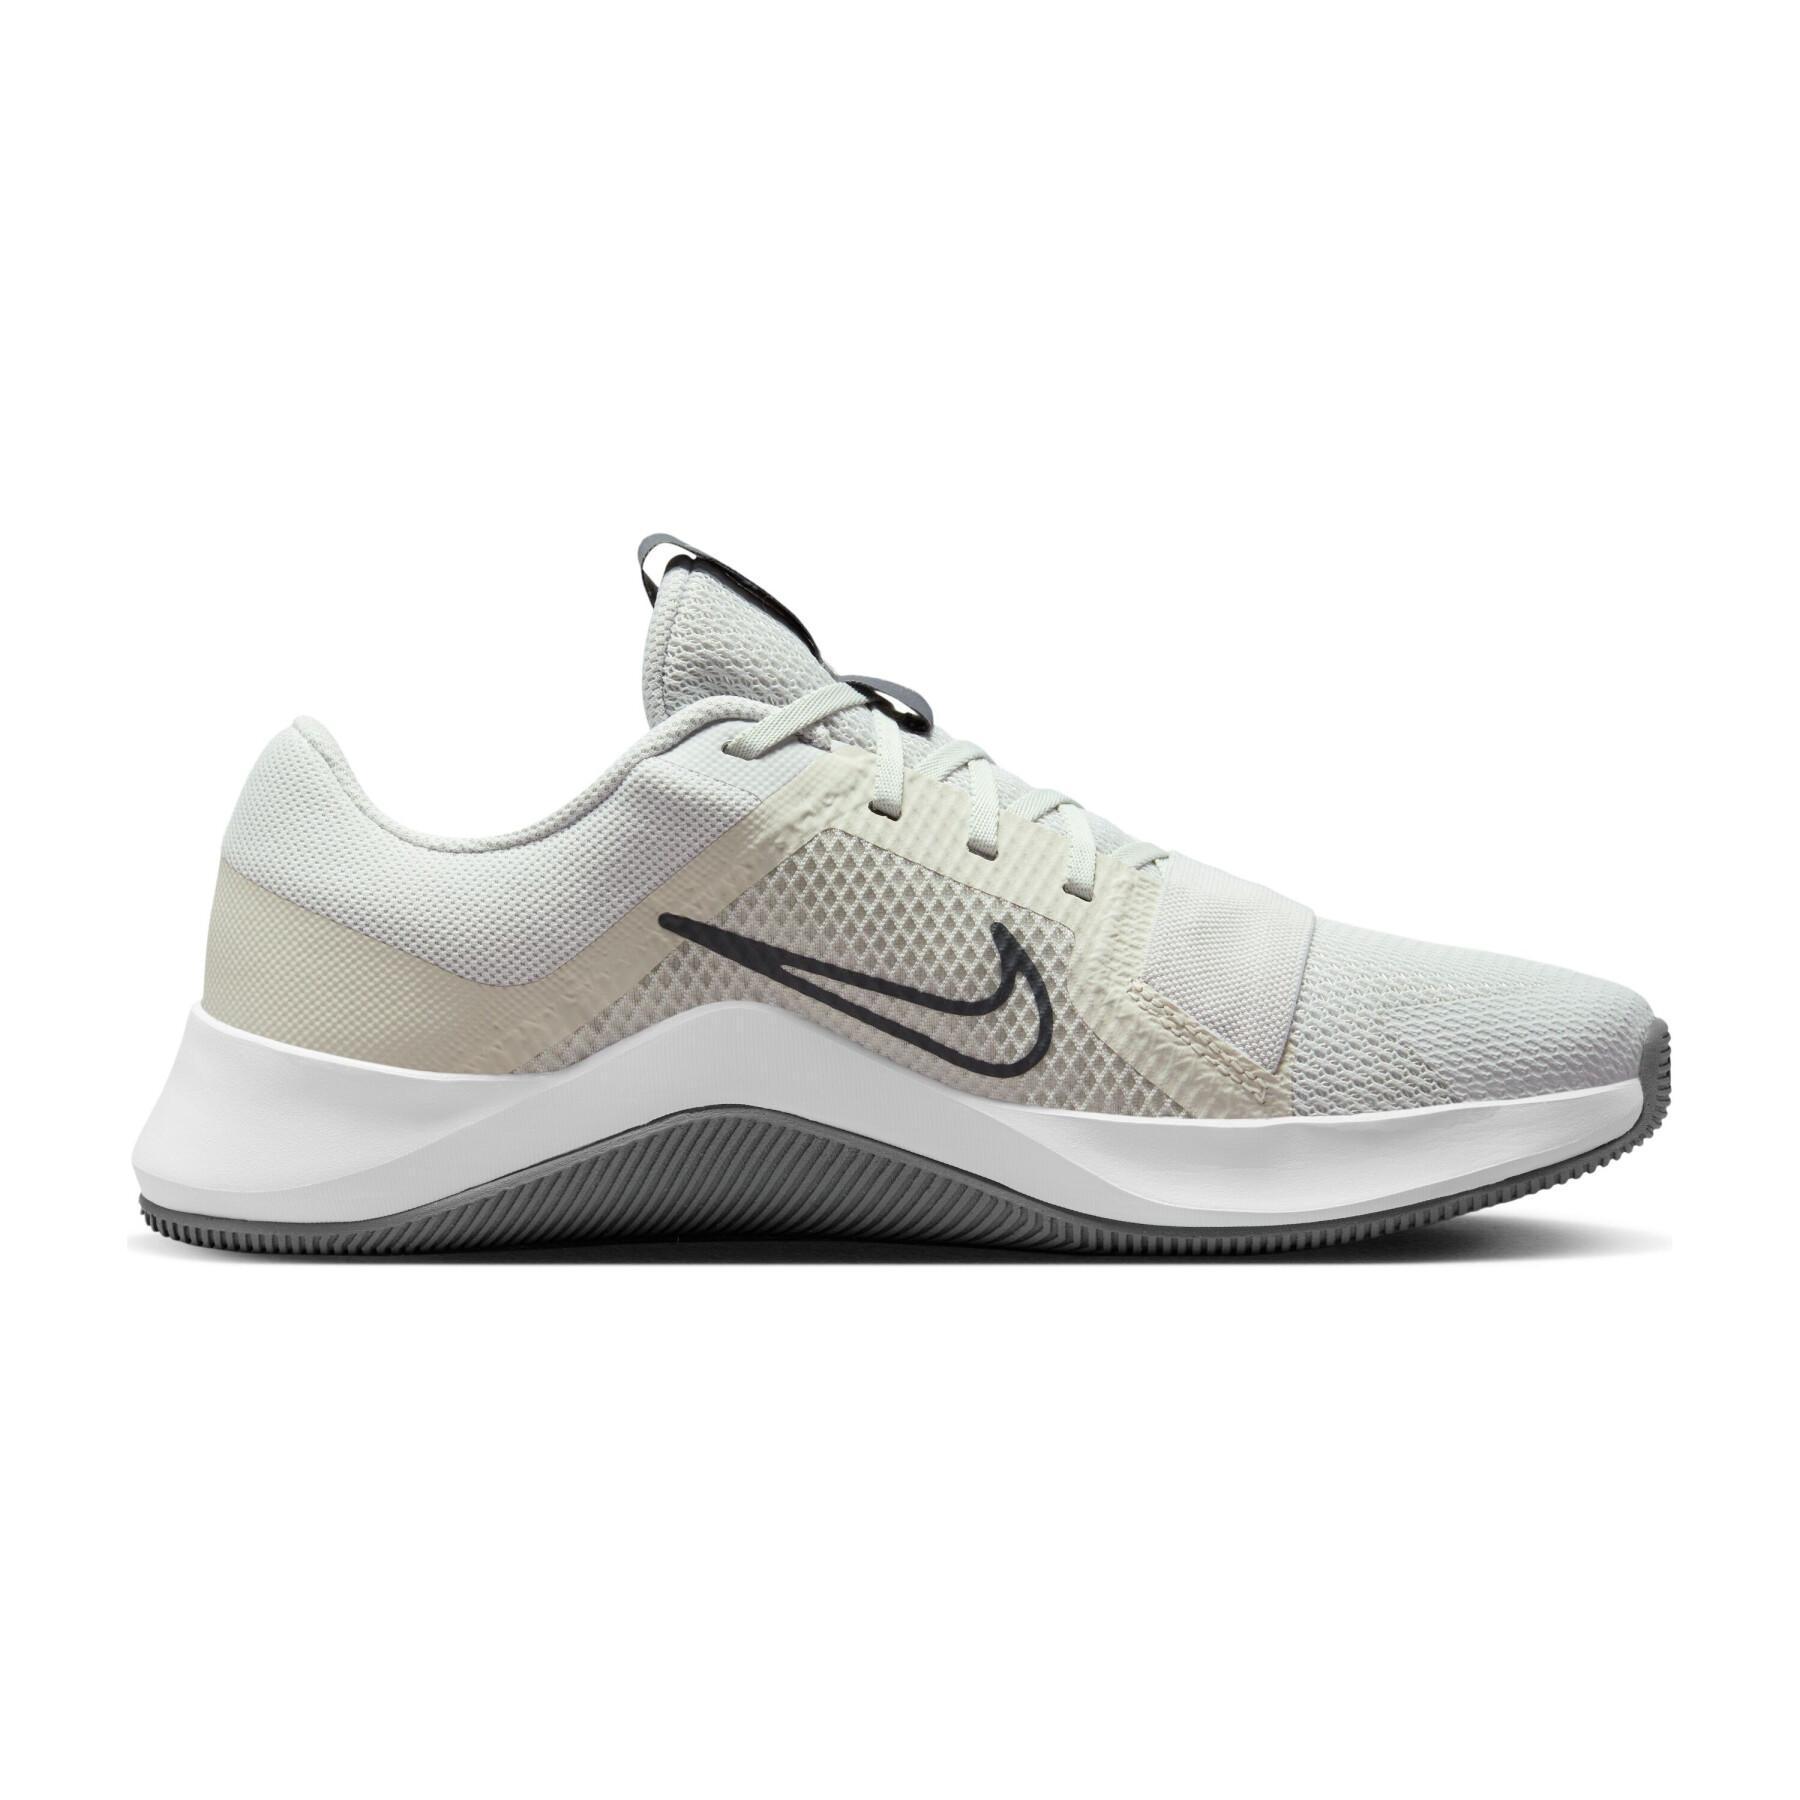 Chaussures de cross training Nike MC Trainer 2